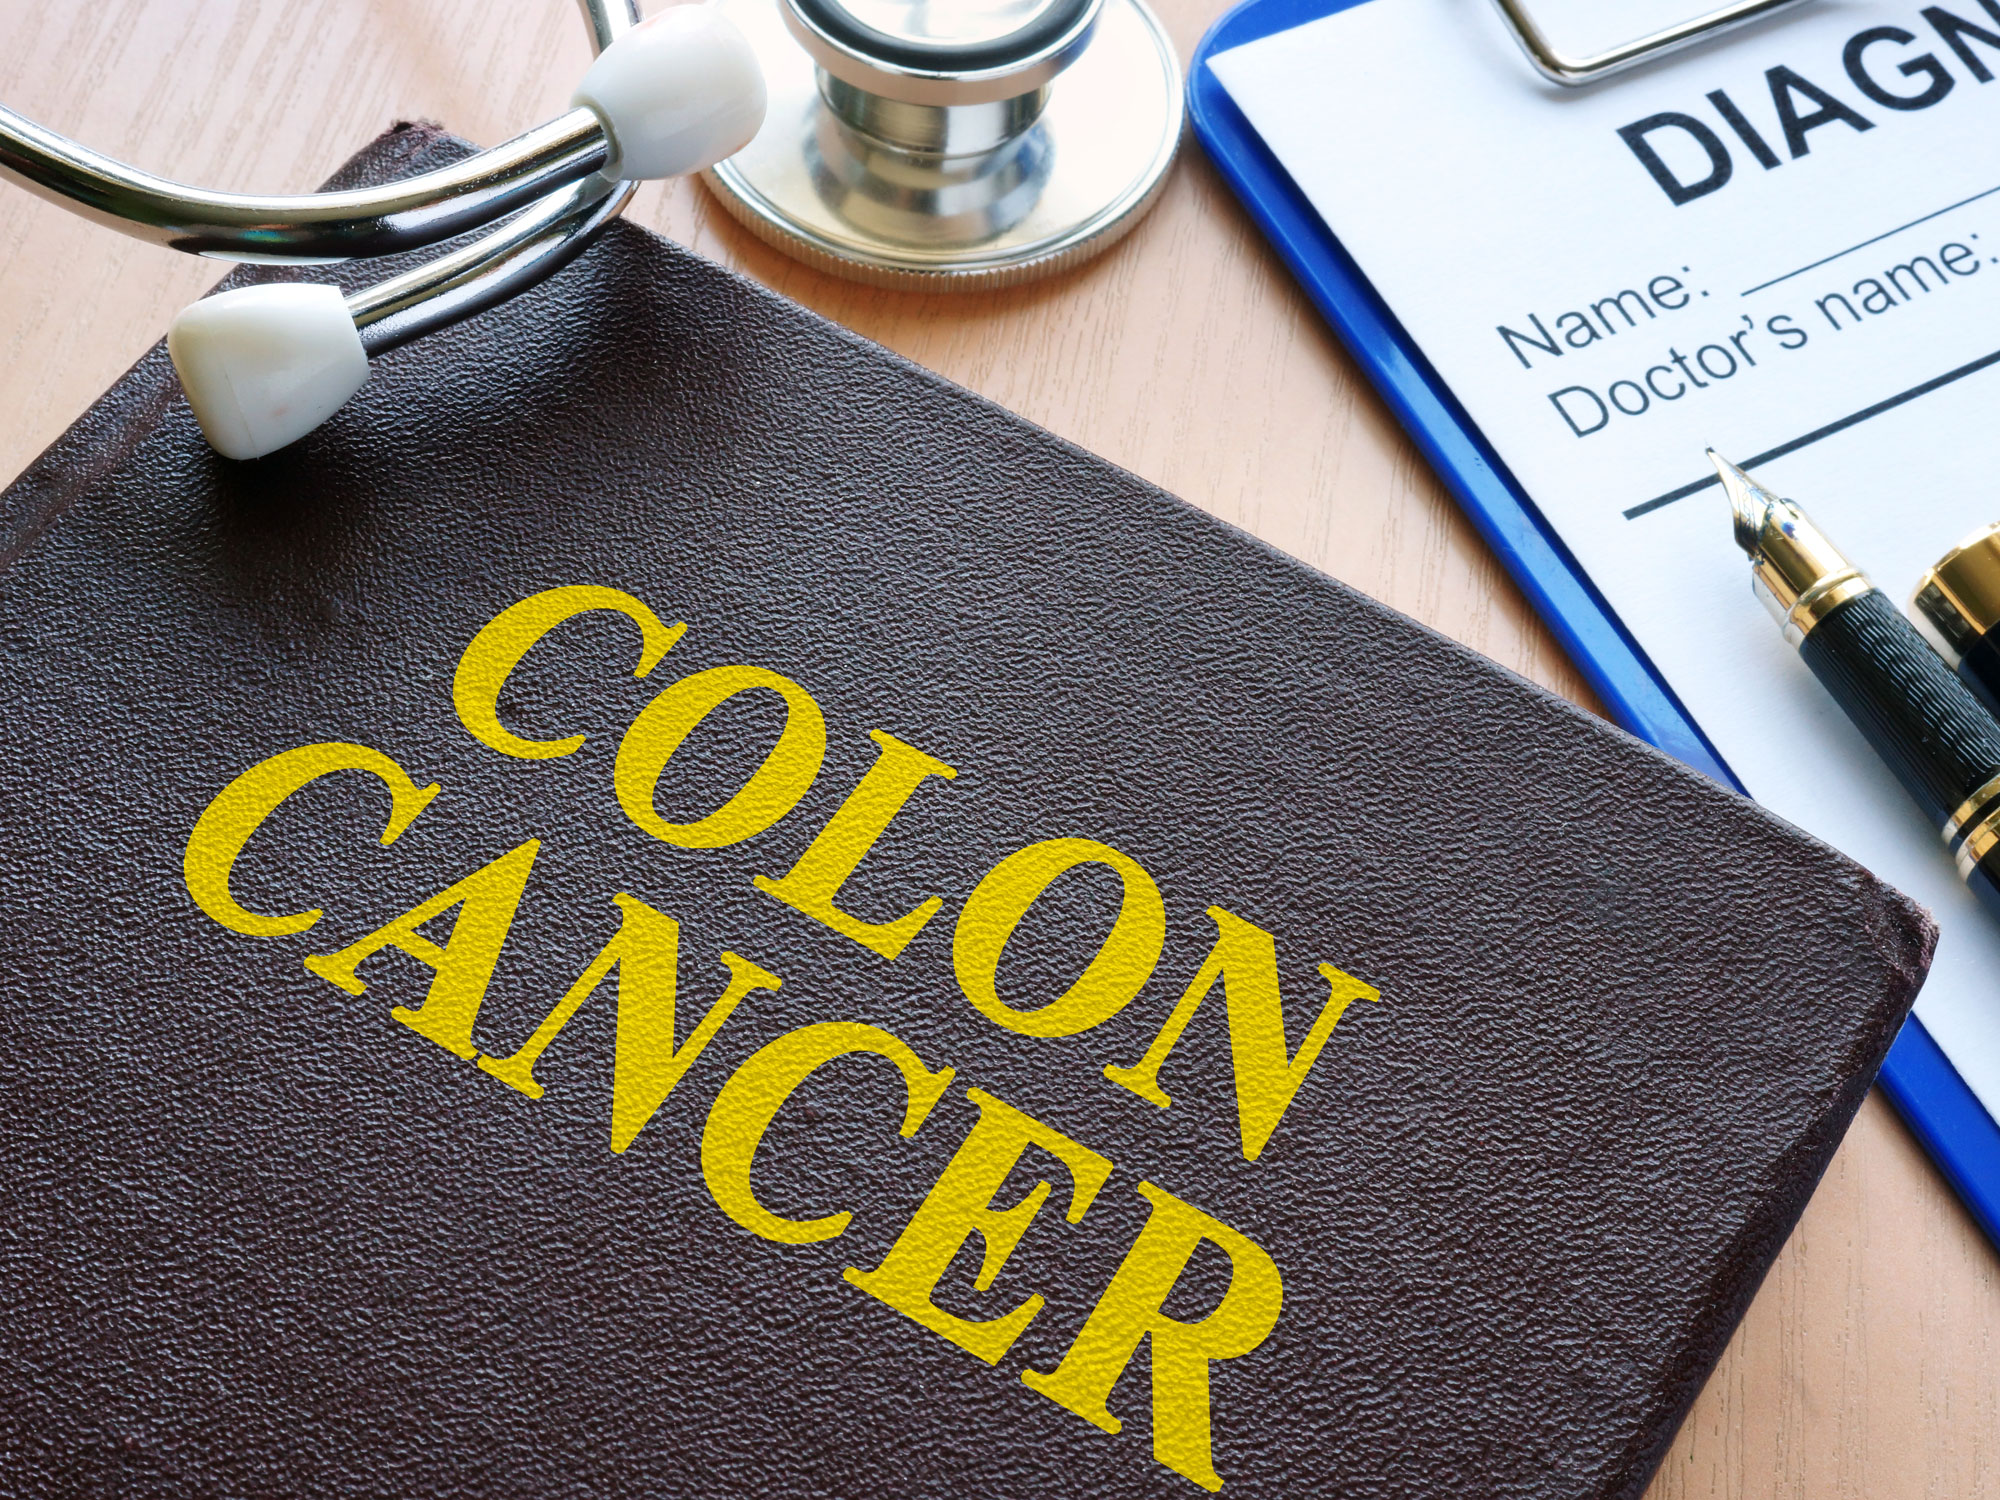 The promising prescription for colon cancer